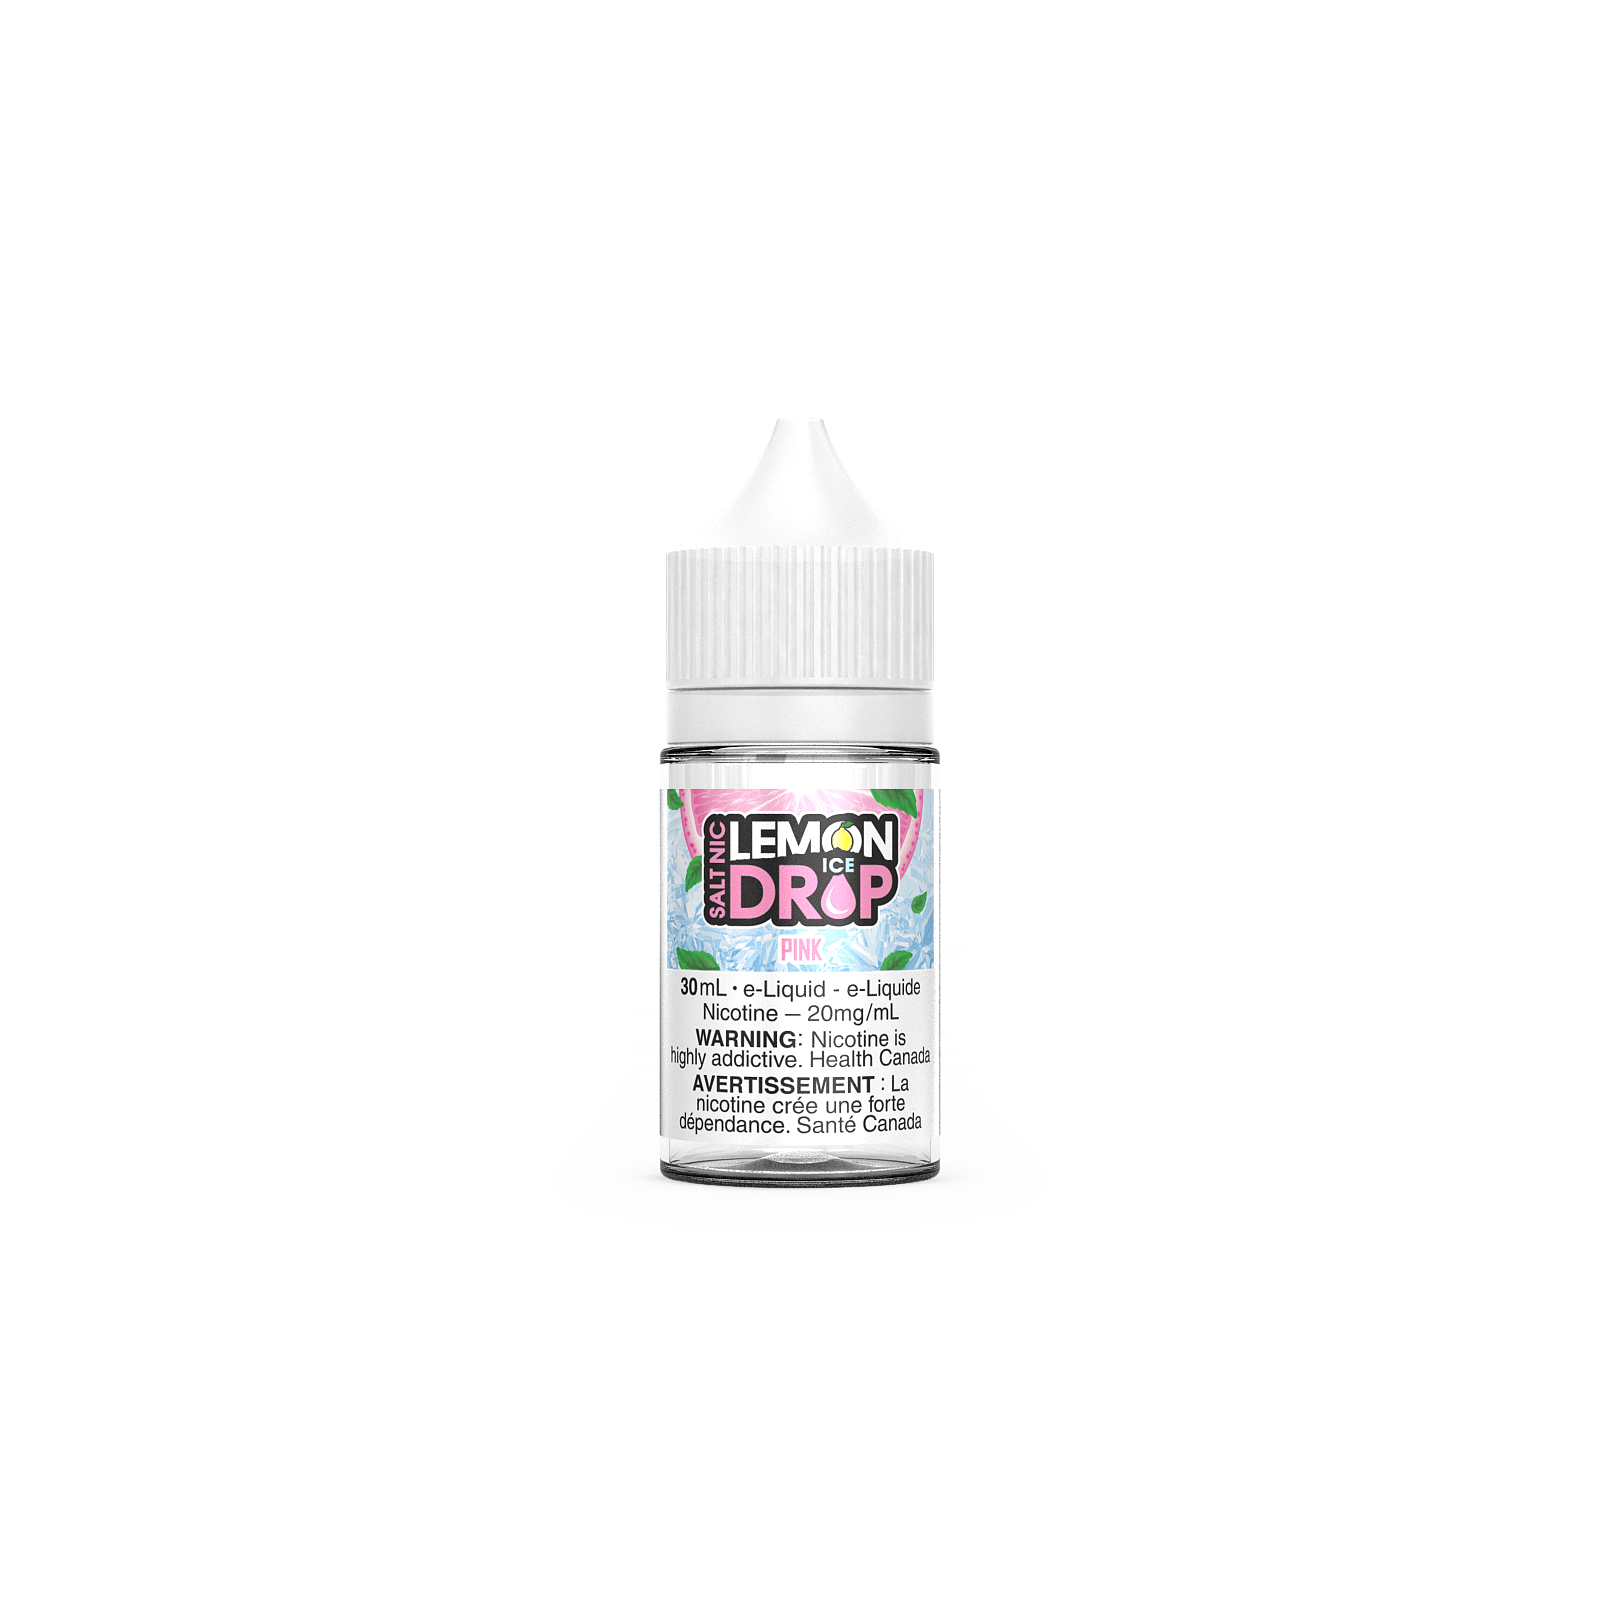 Lemon Drop Ice Salt - Pink available on Canada online vape shop